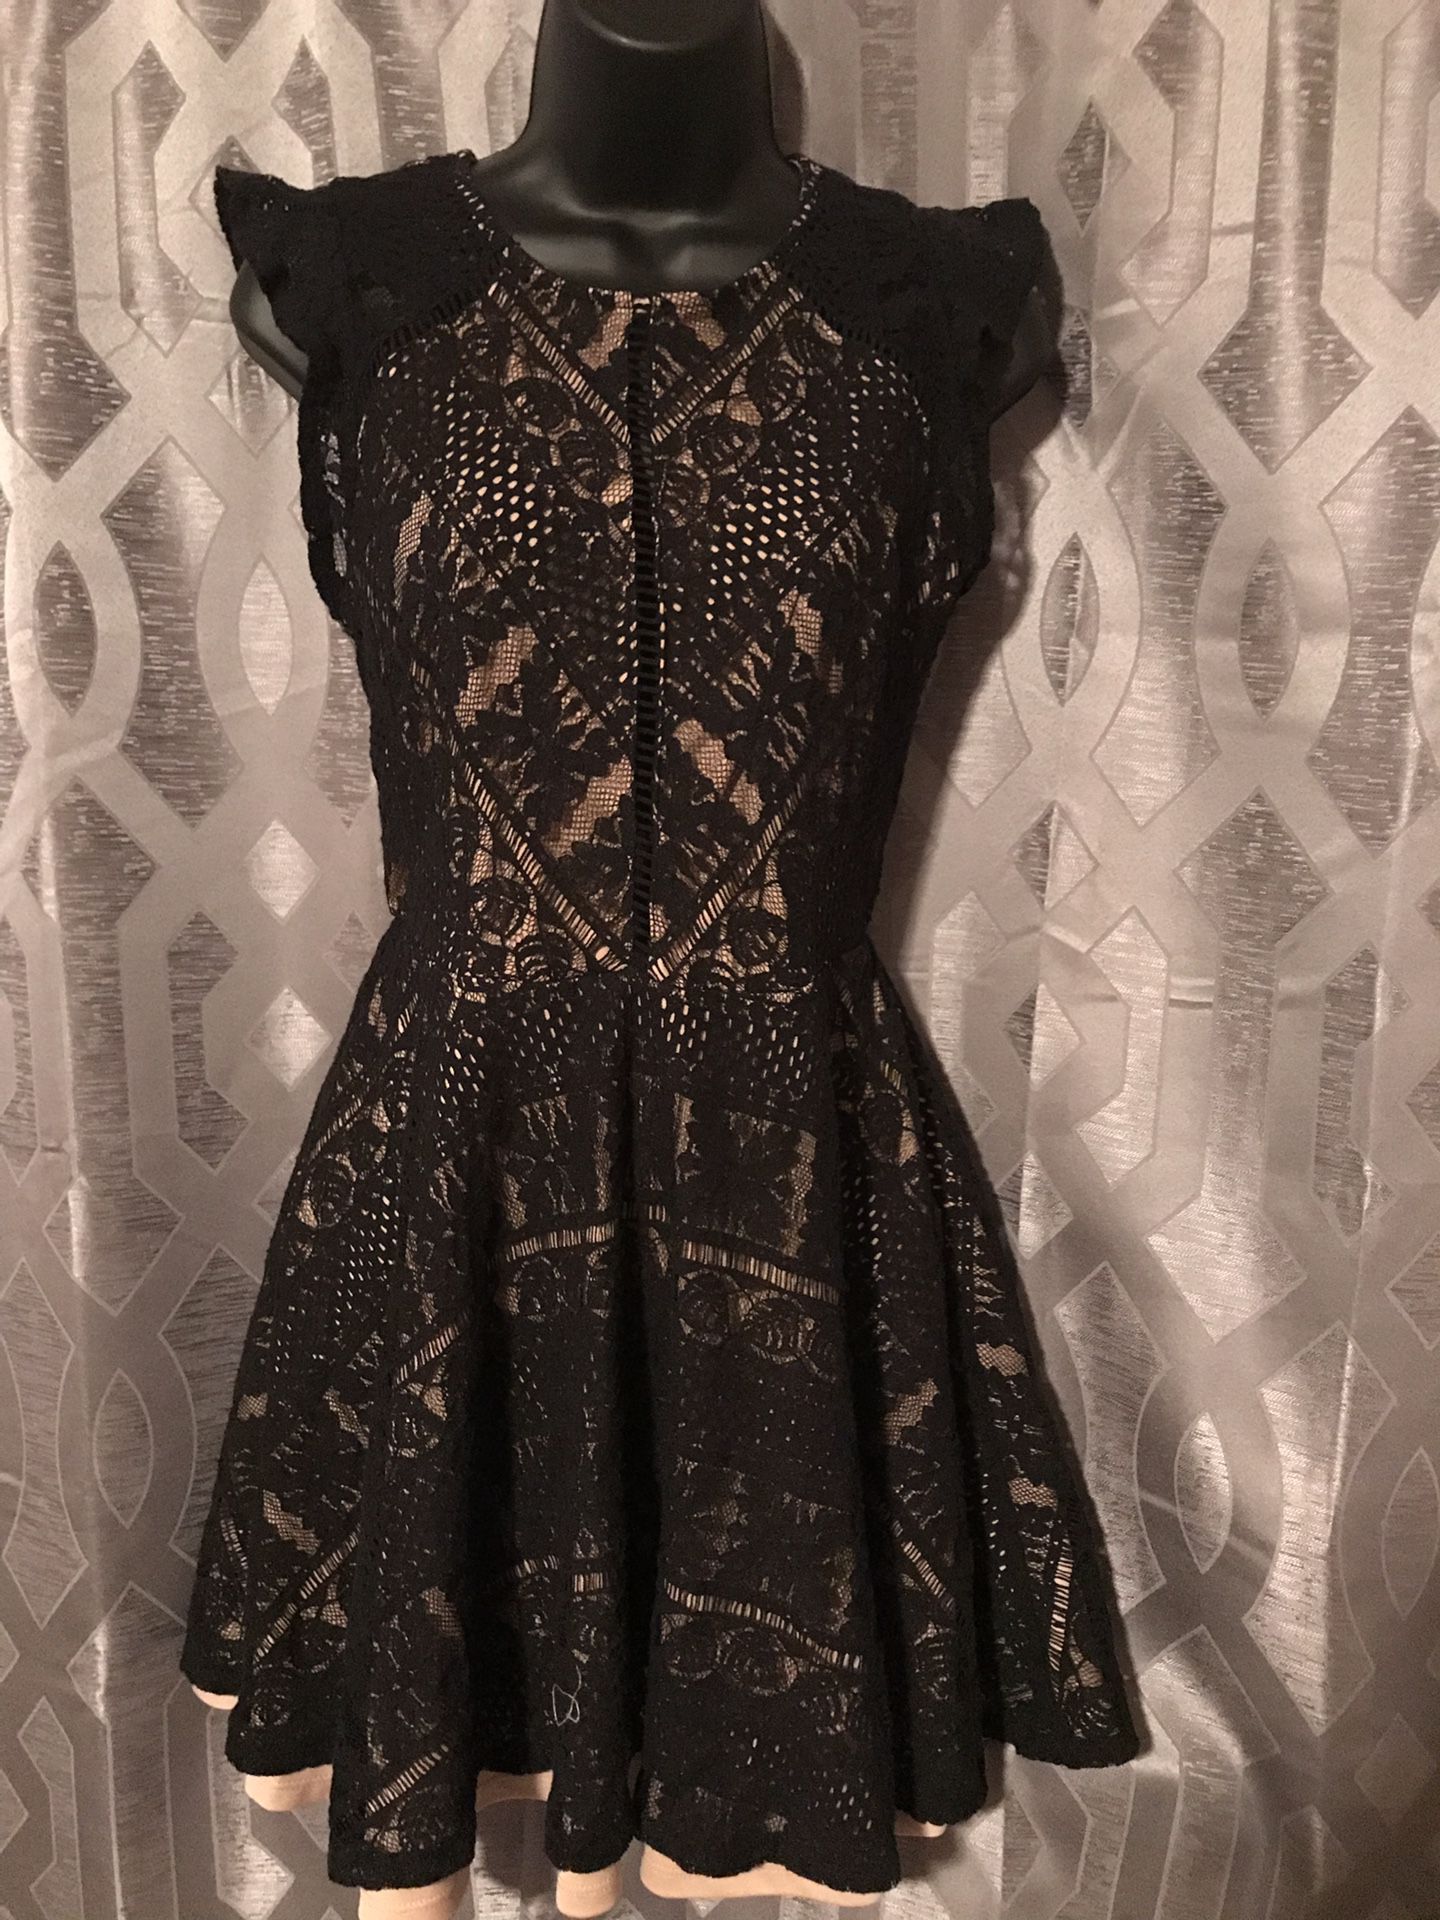 Casual black lace dress